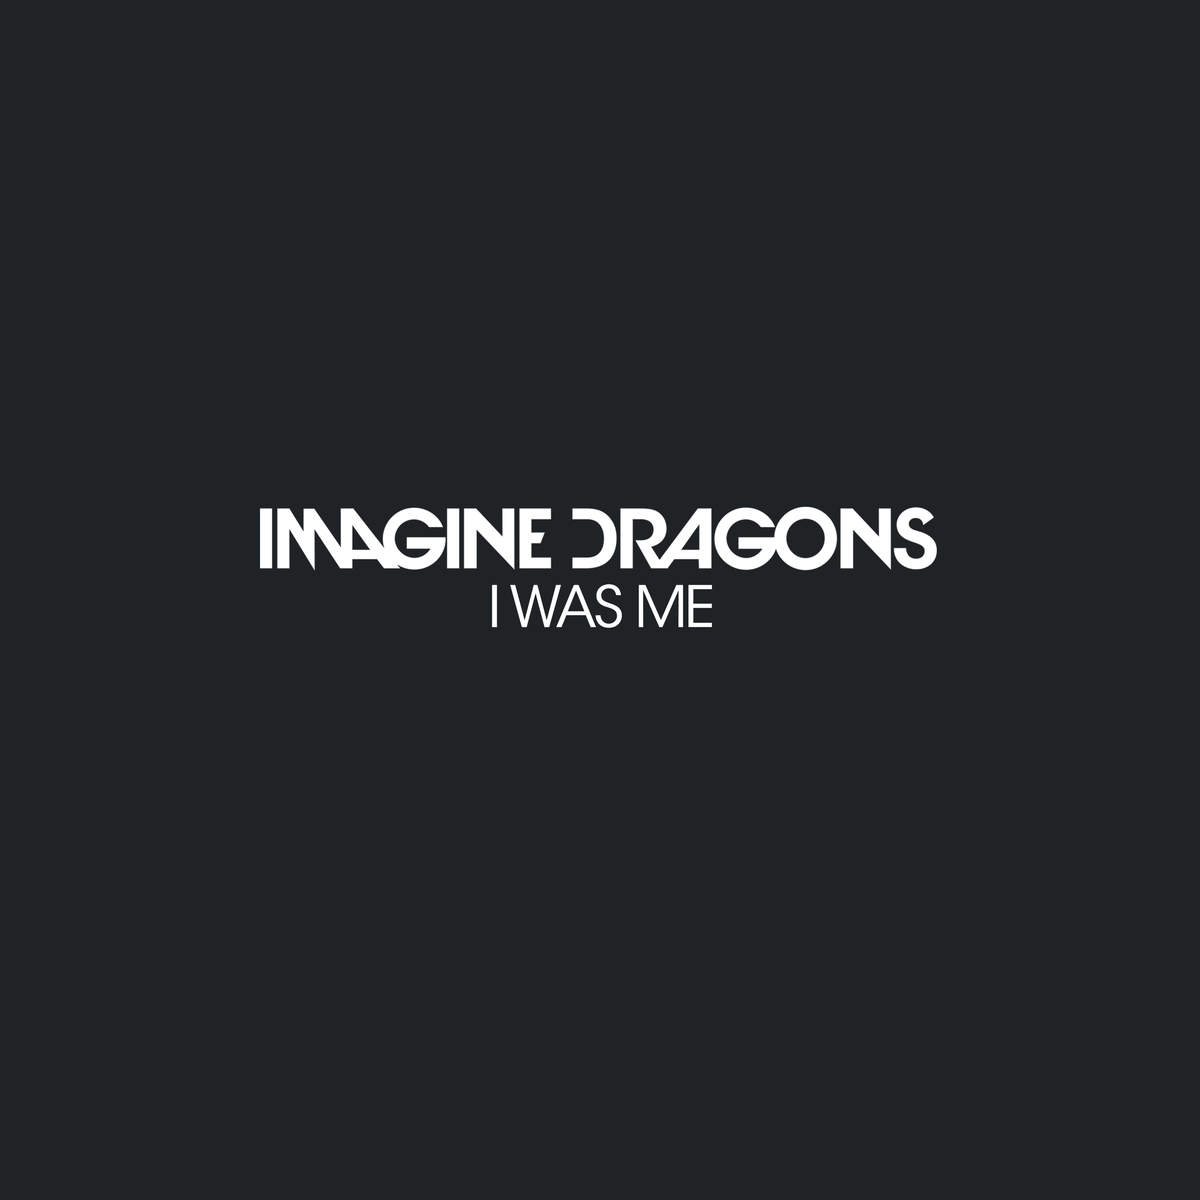 Imagine Dragons Black and White Logo - I Was Me